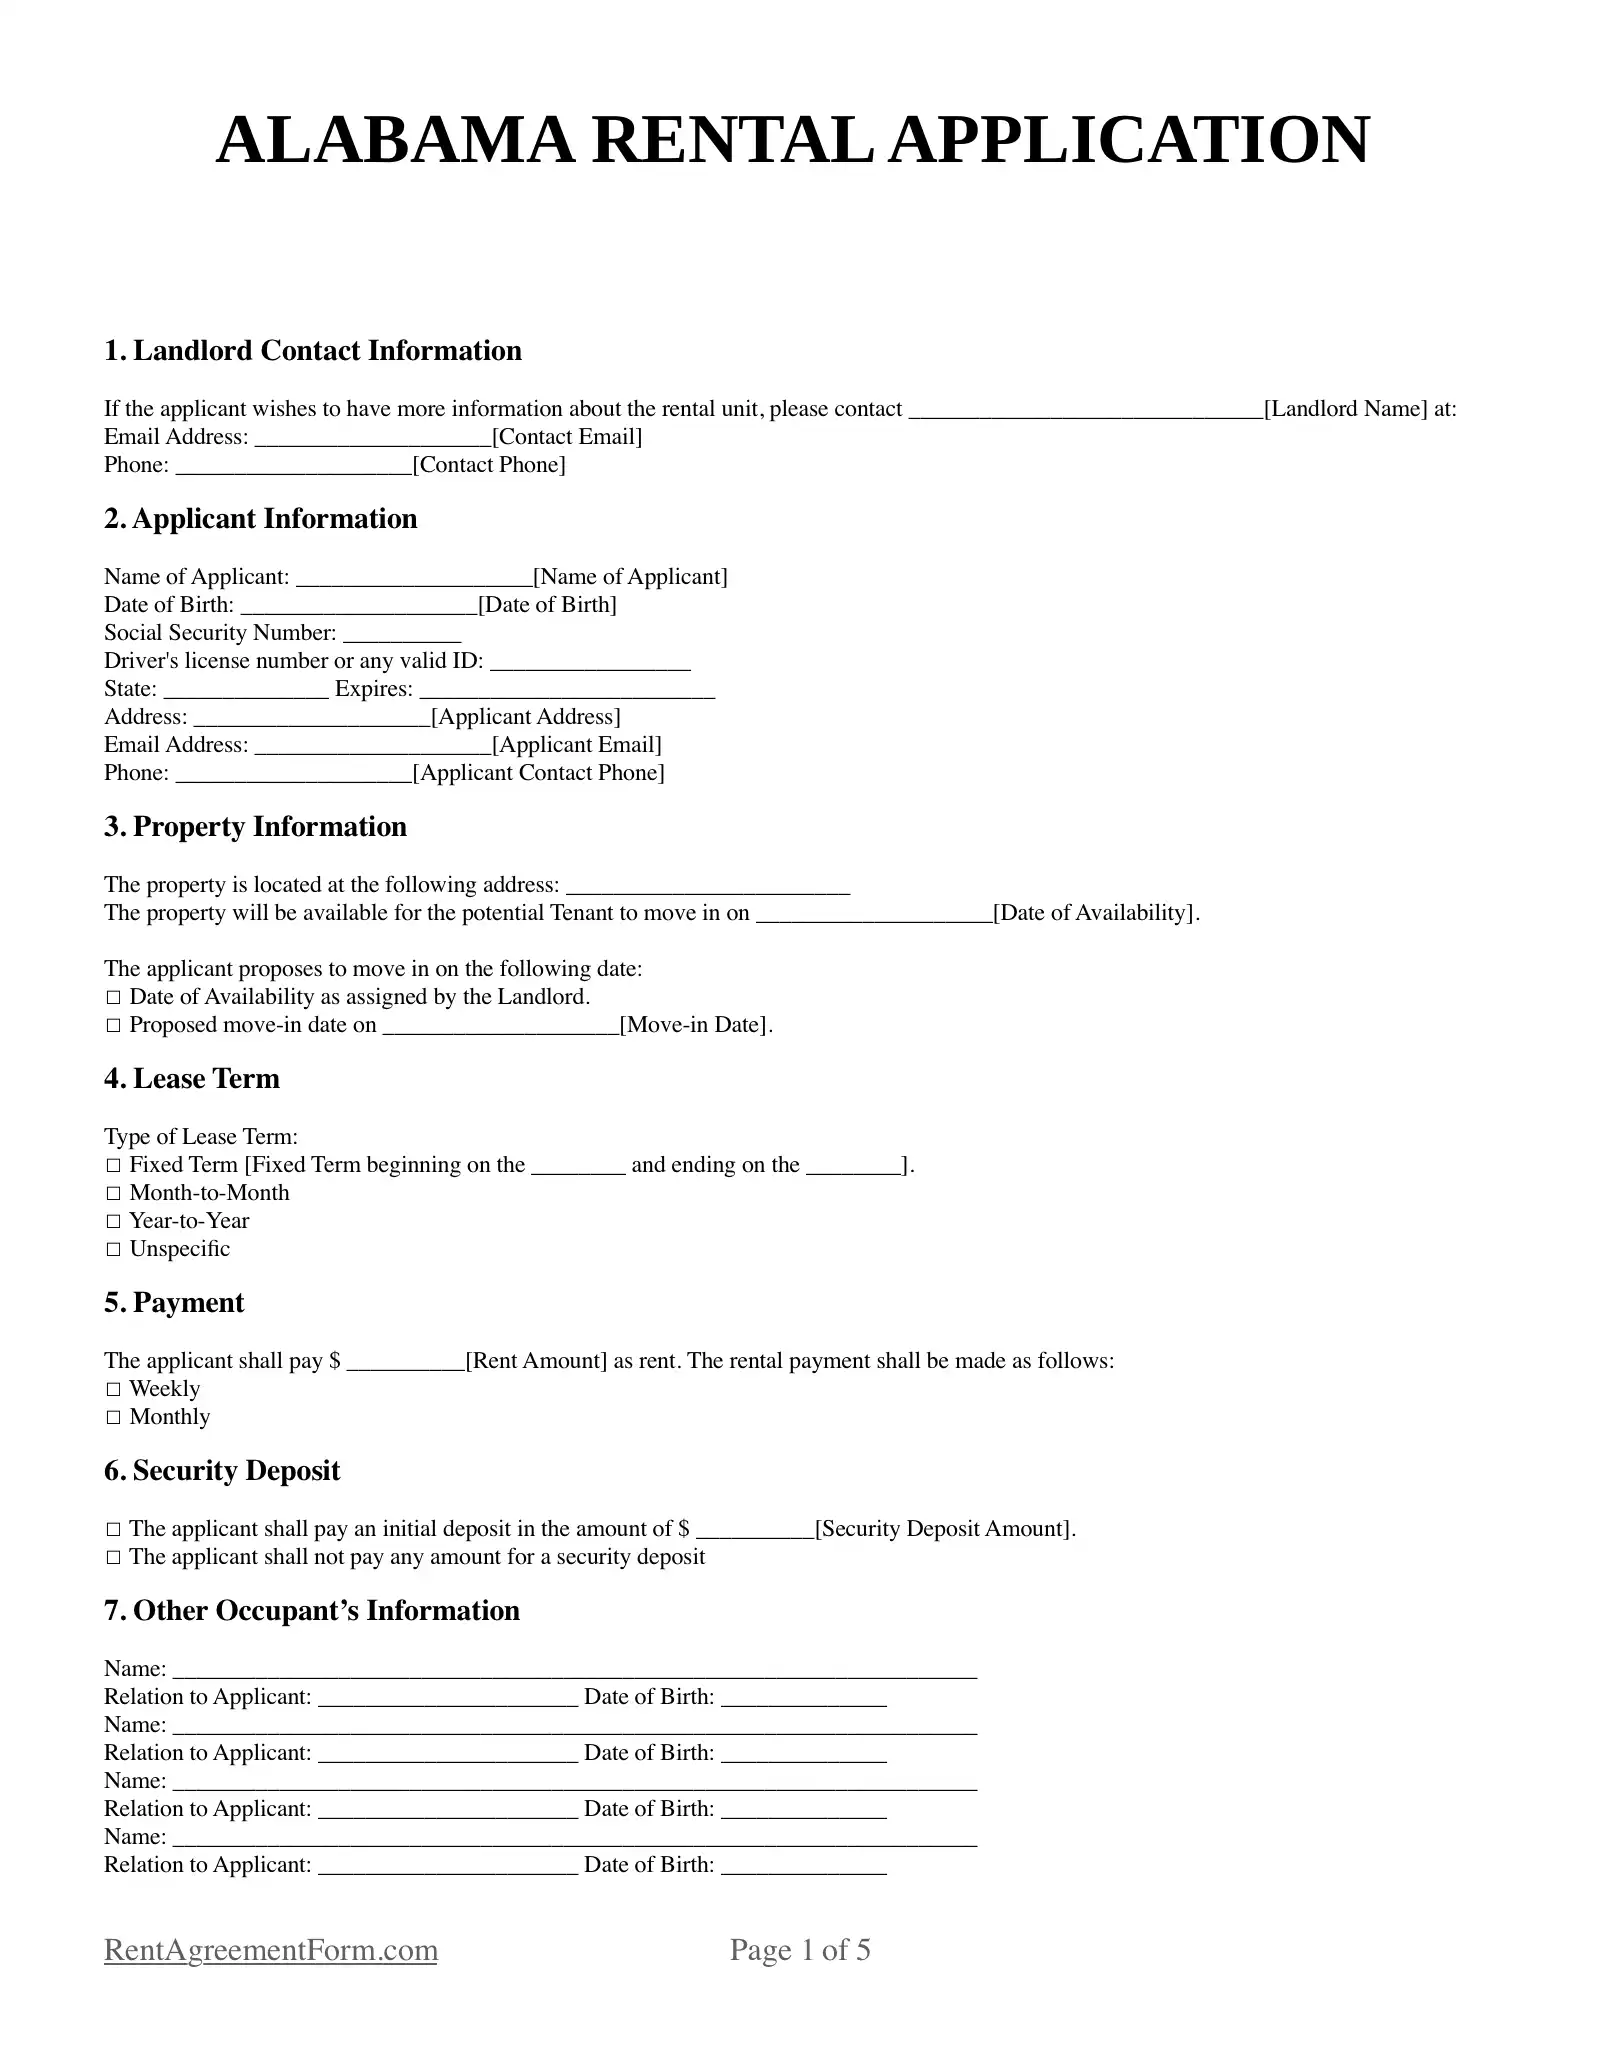 Alabama Rental Application Sample